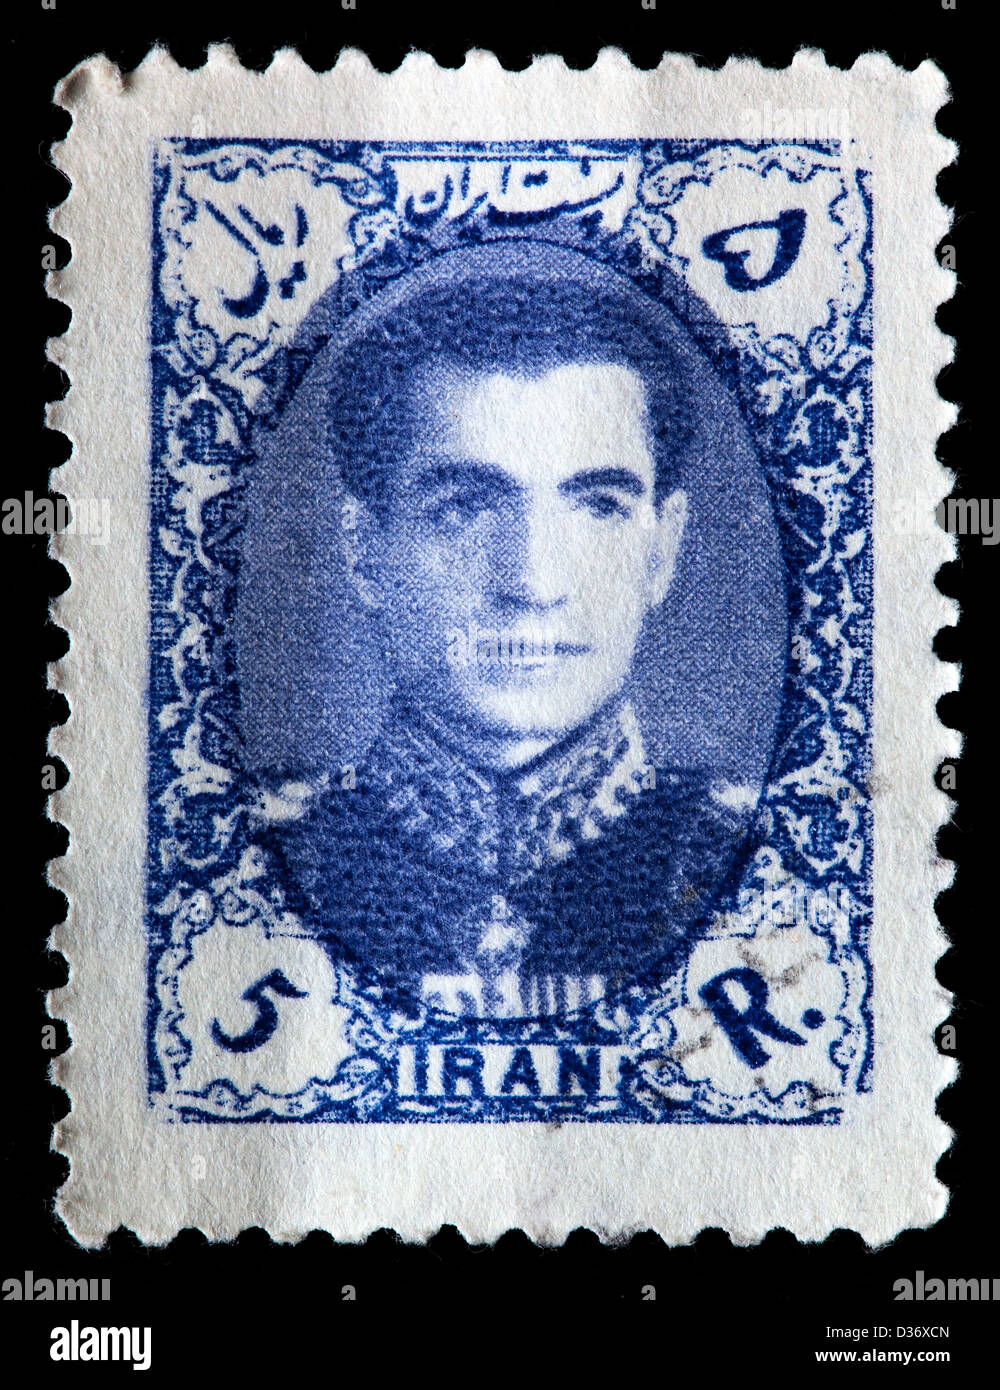 Mohammad Reza Shah Pahlavi, postage stamp, Iran, 1956 Stock Photo